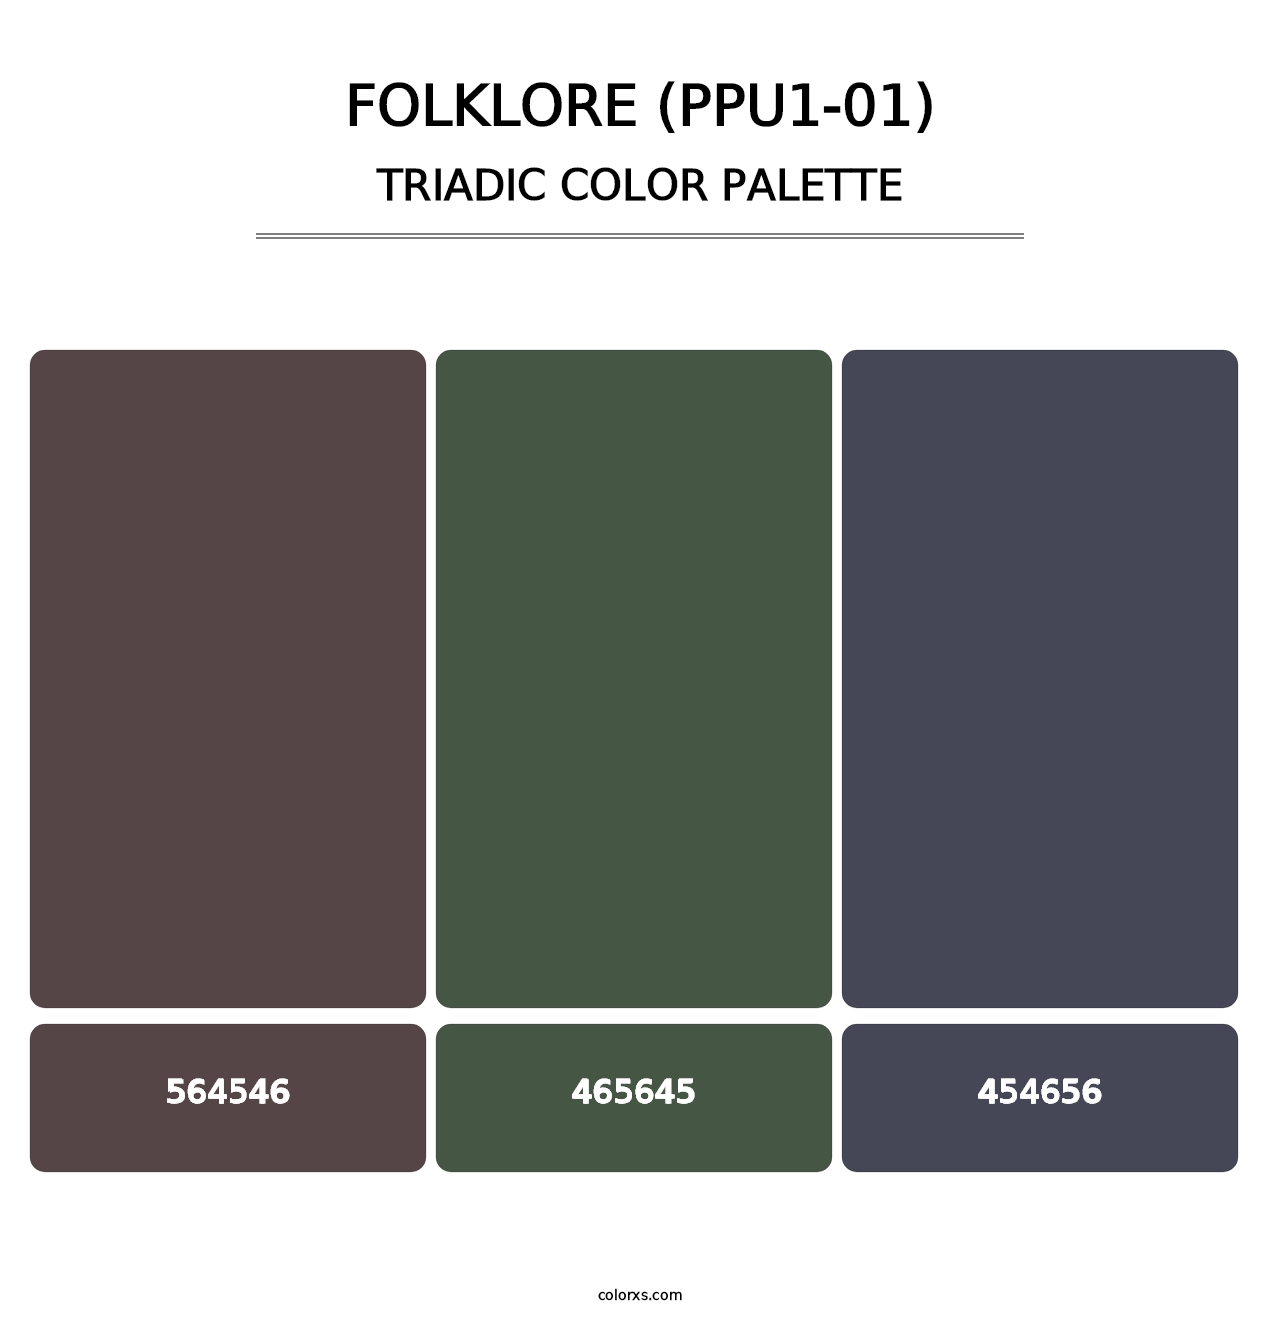 Folklore (PPU1-01) - Triadic Color Palette